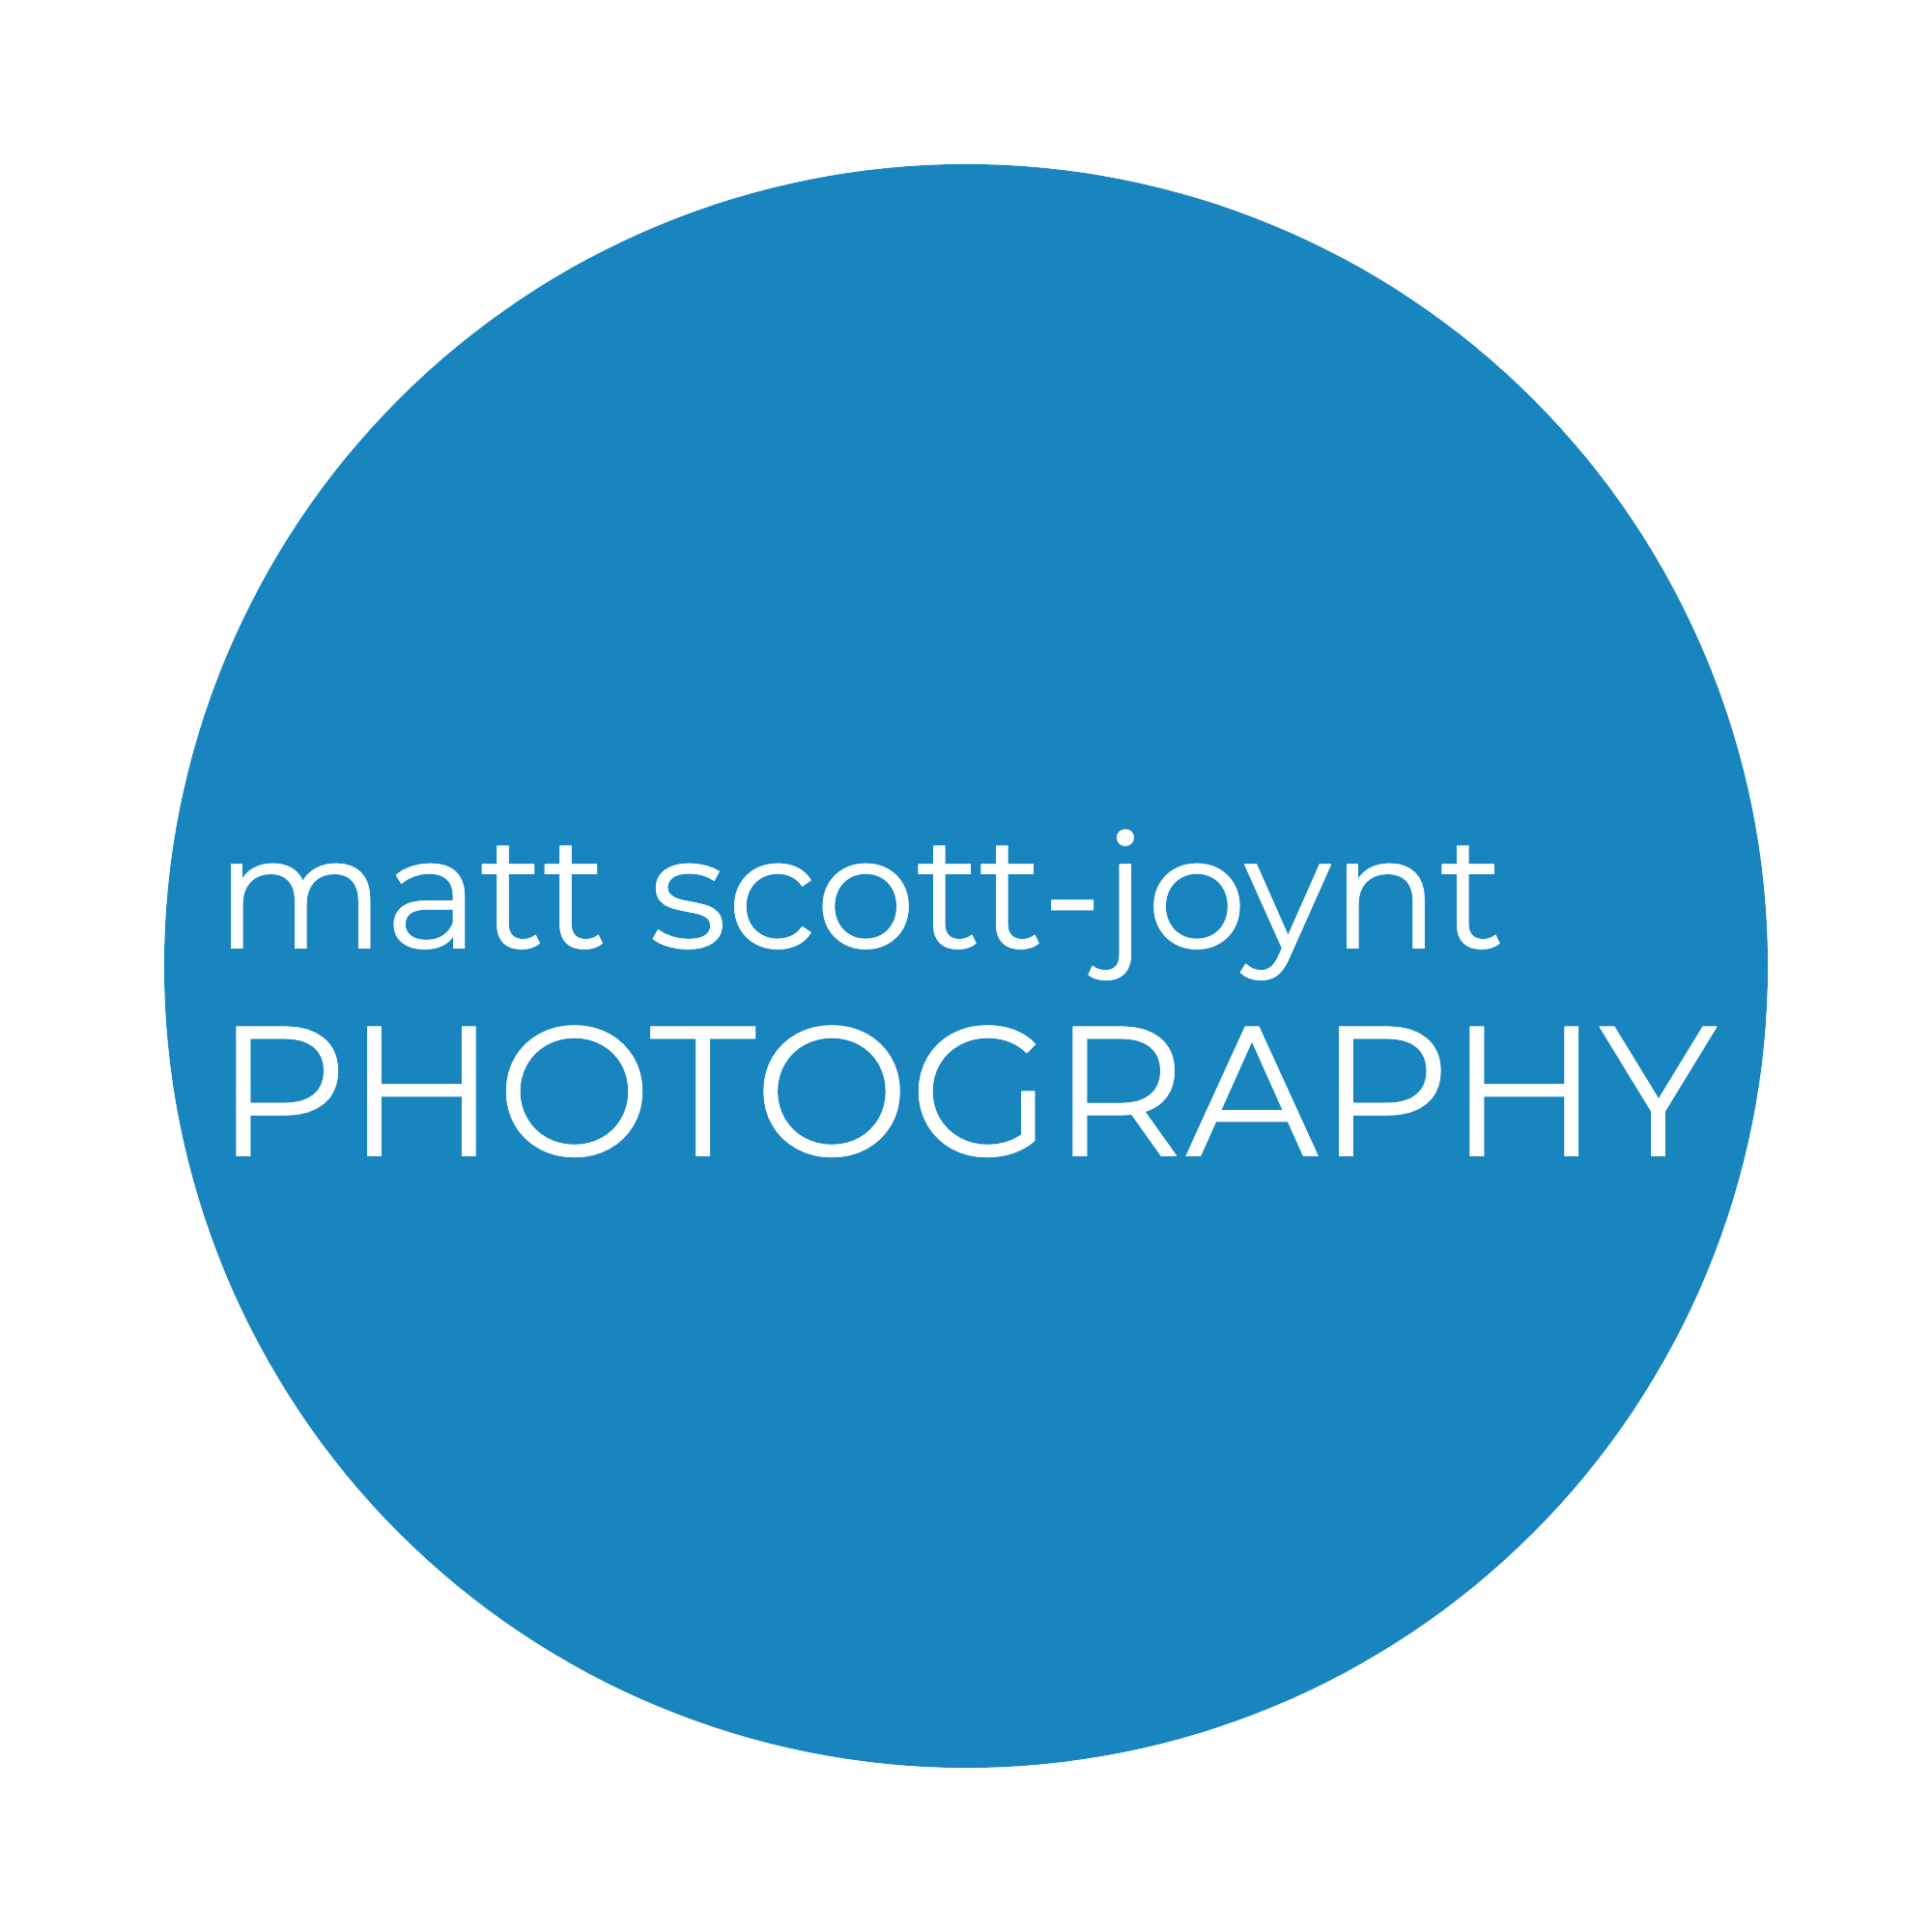 MATT SCOTT-JOYNT PHOTOGRAPHY